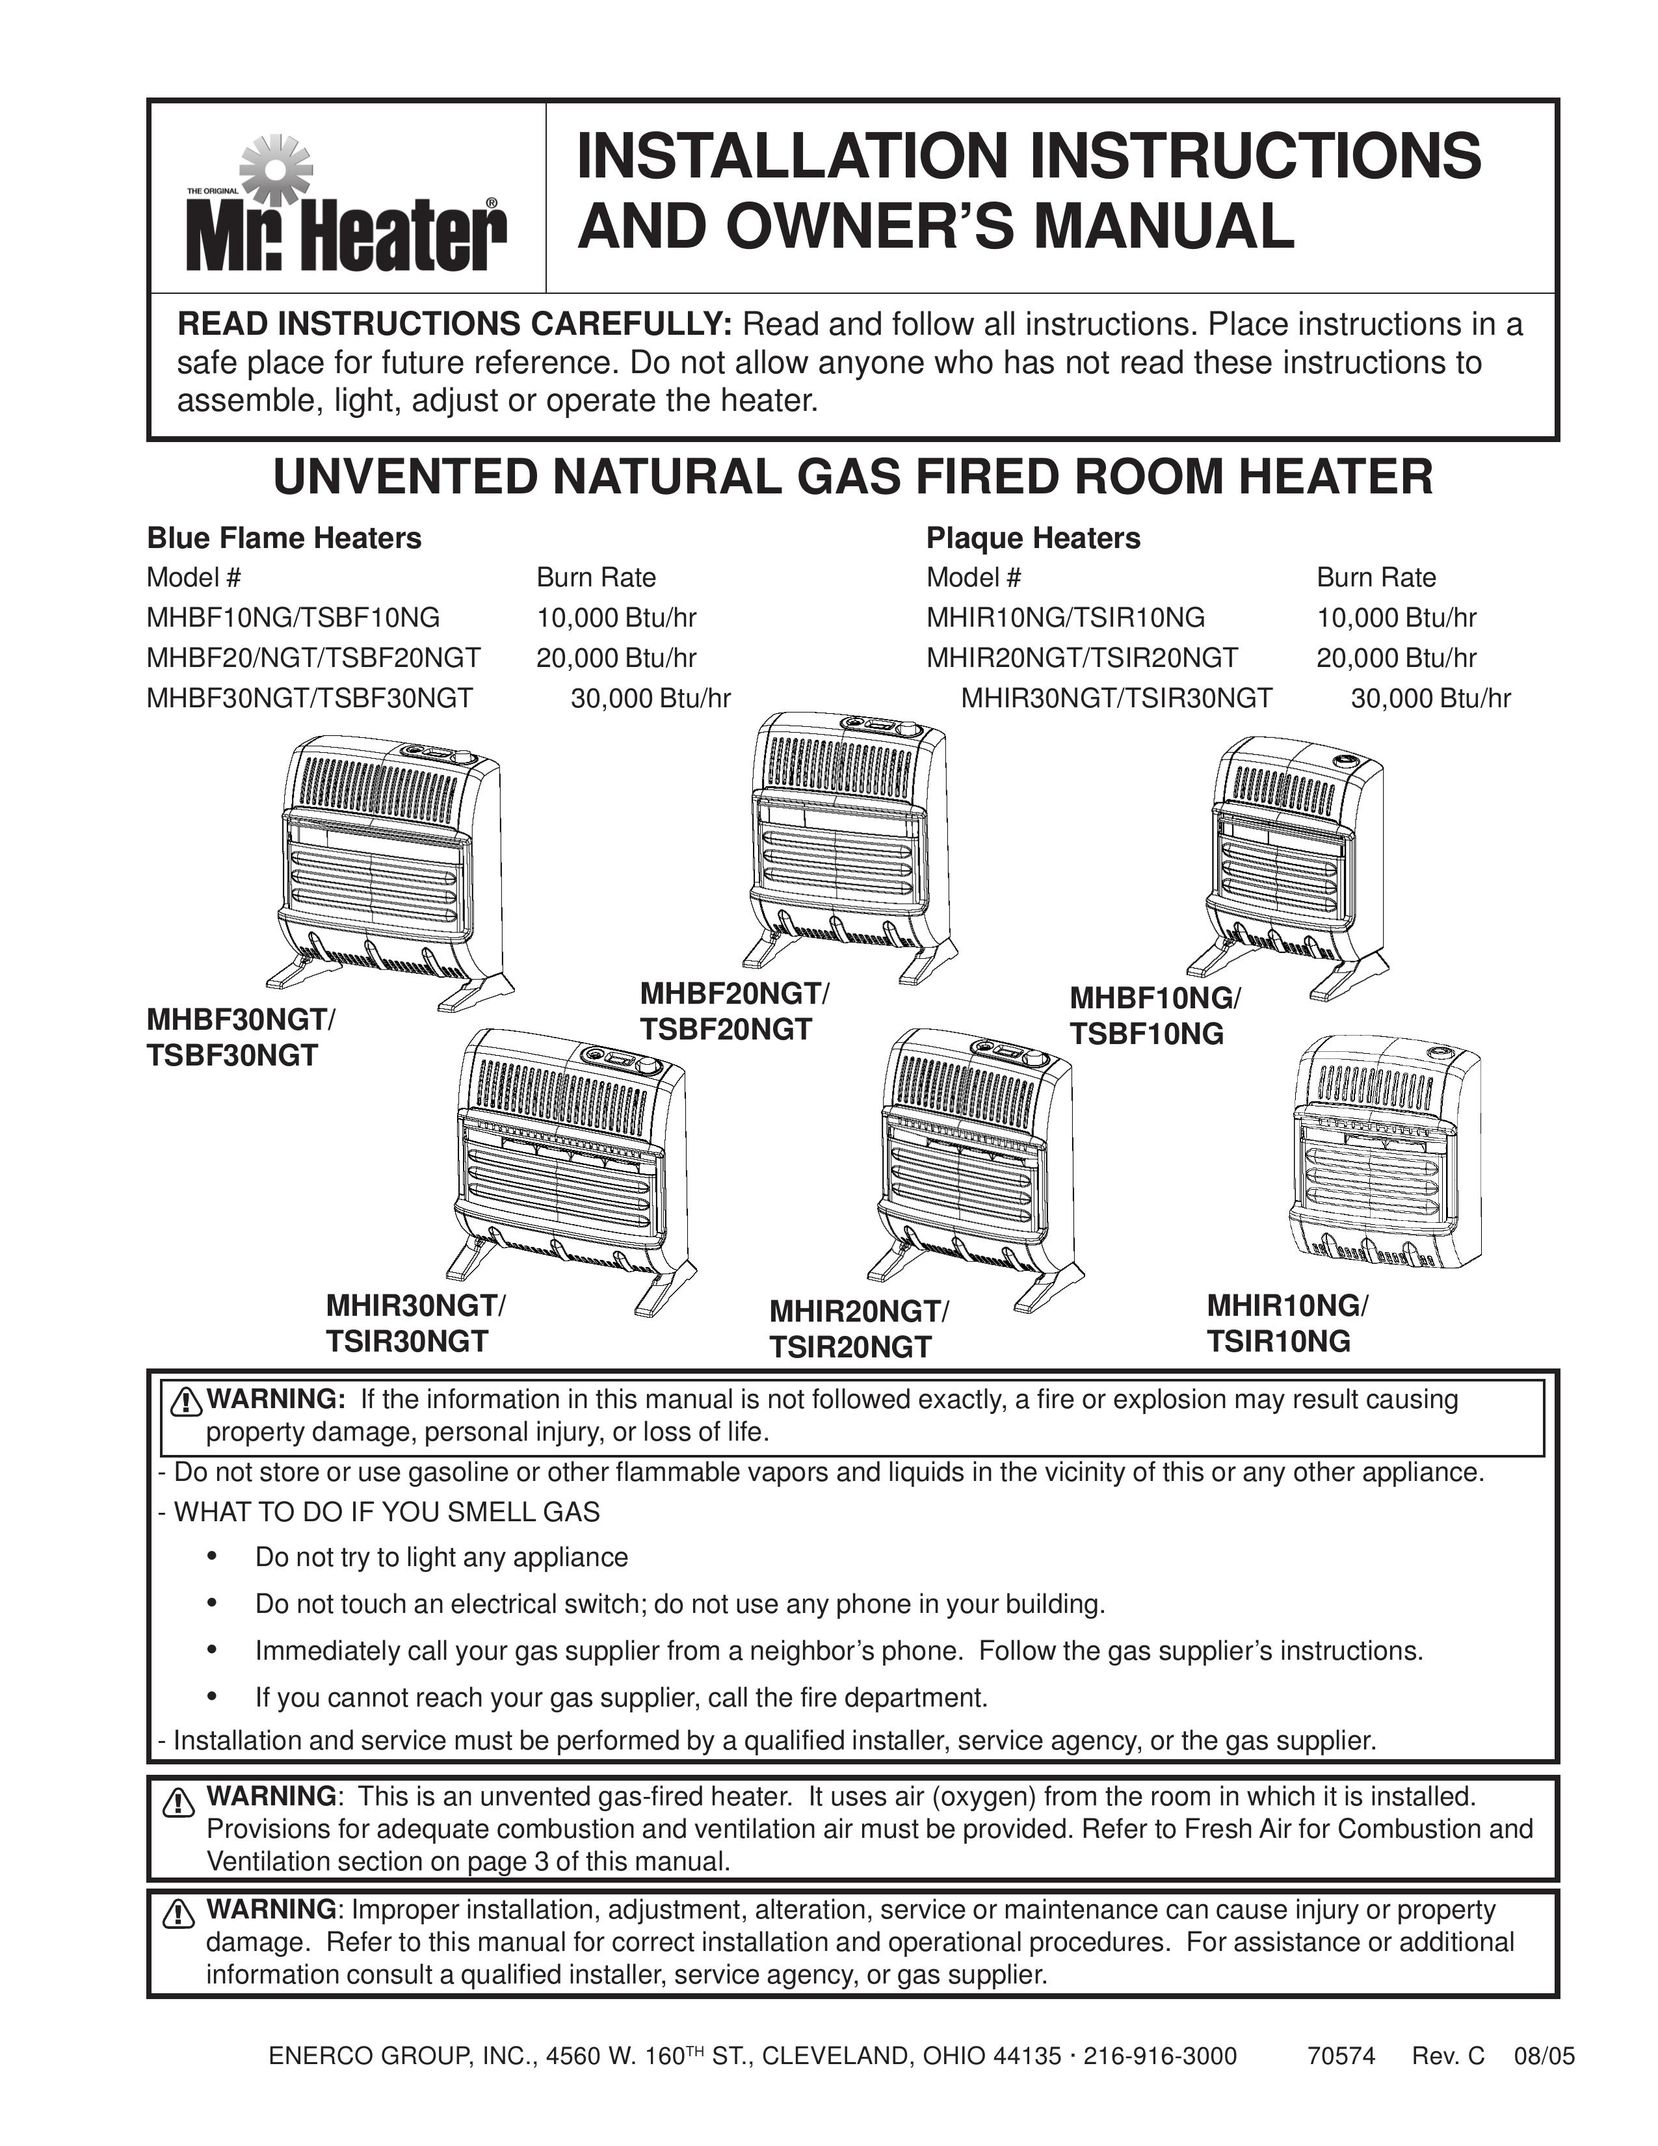 Enerco MHBF10NG Water Heater User Manual